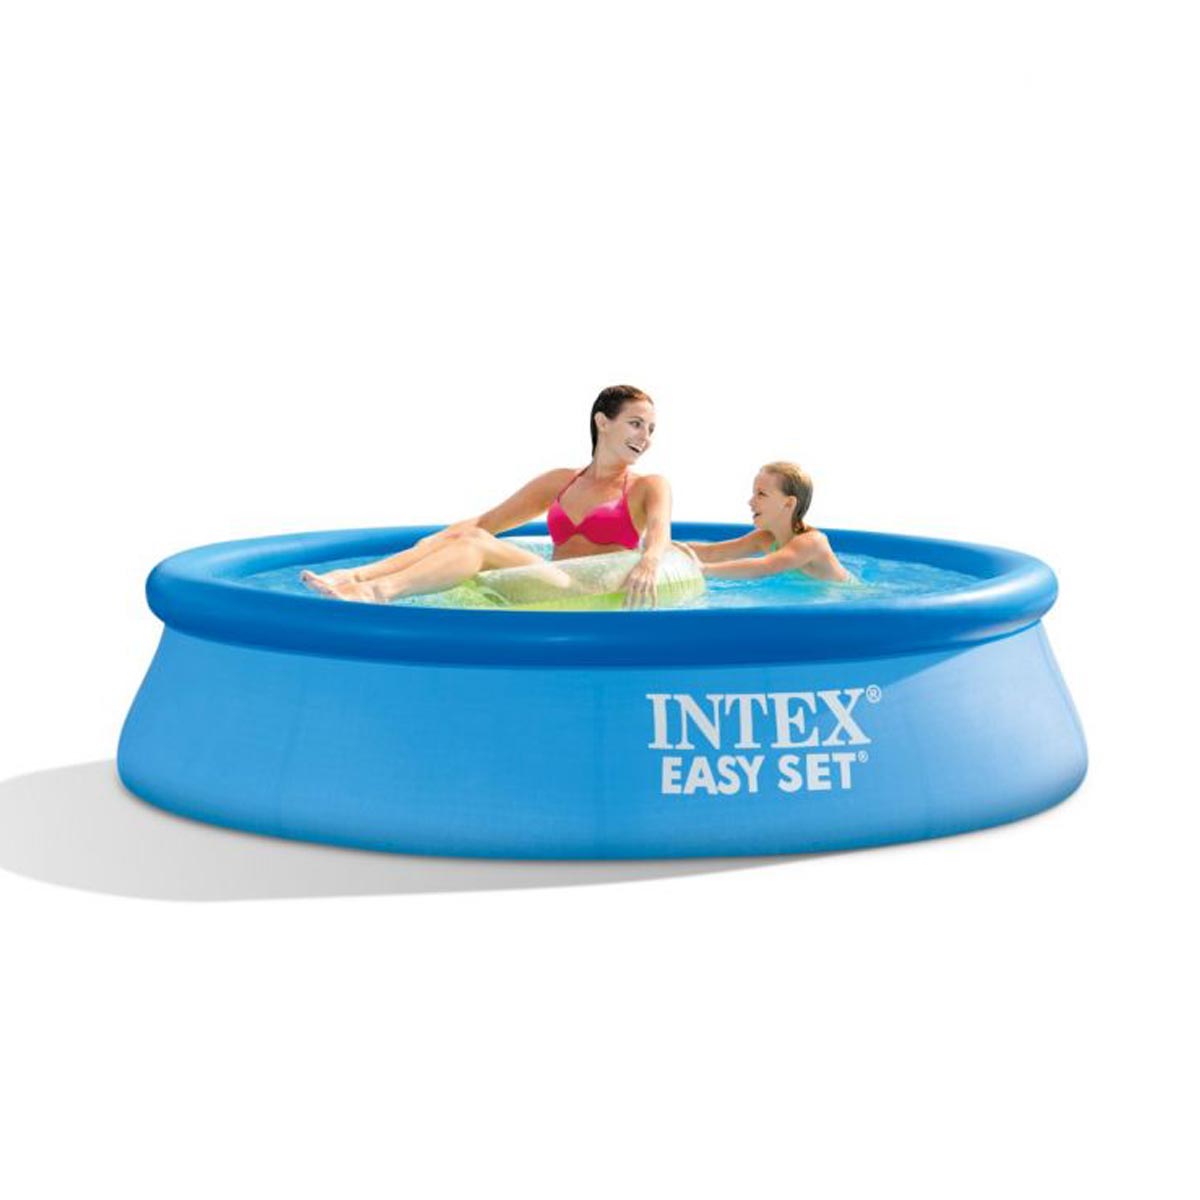 intex easy set pool for kids